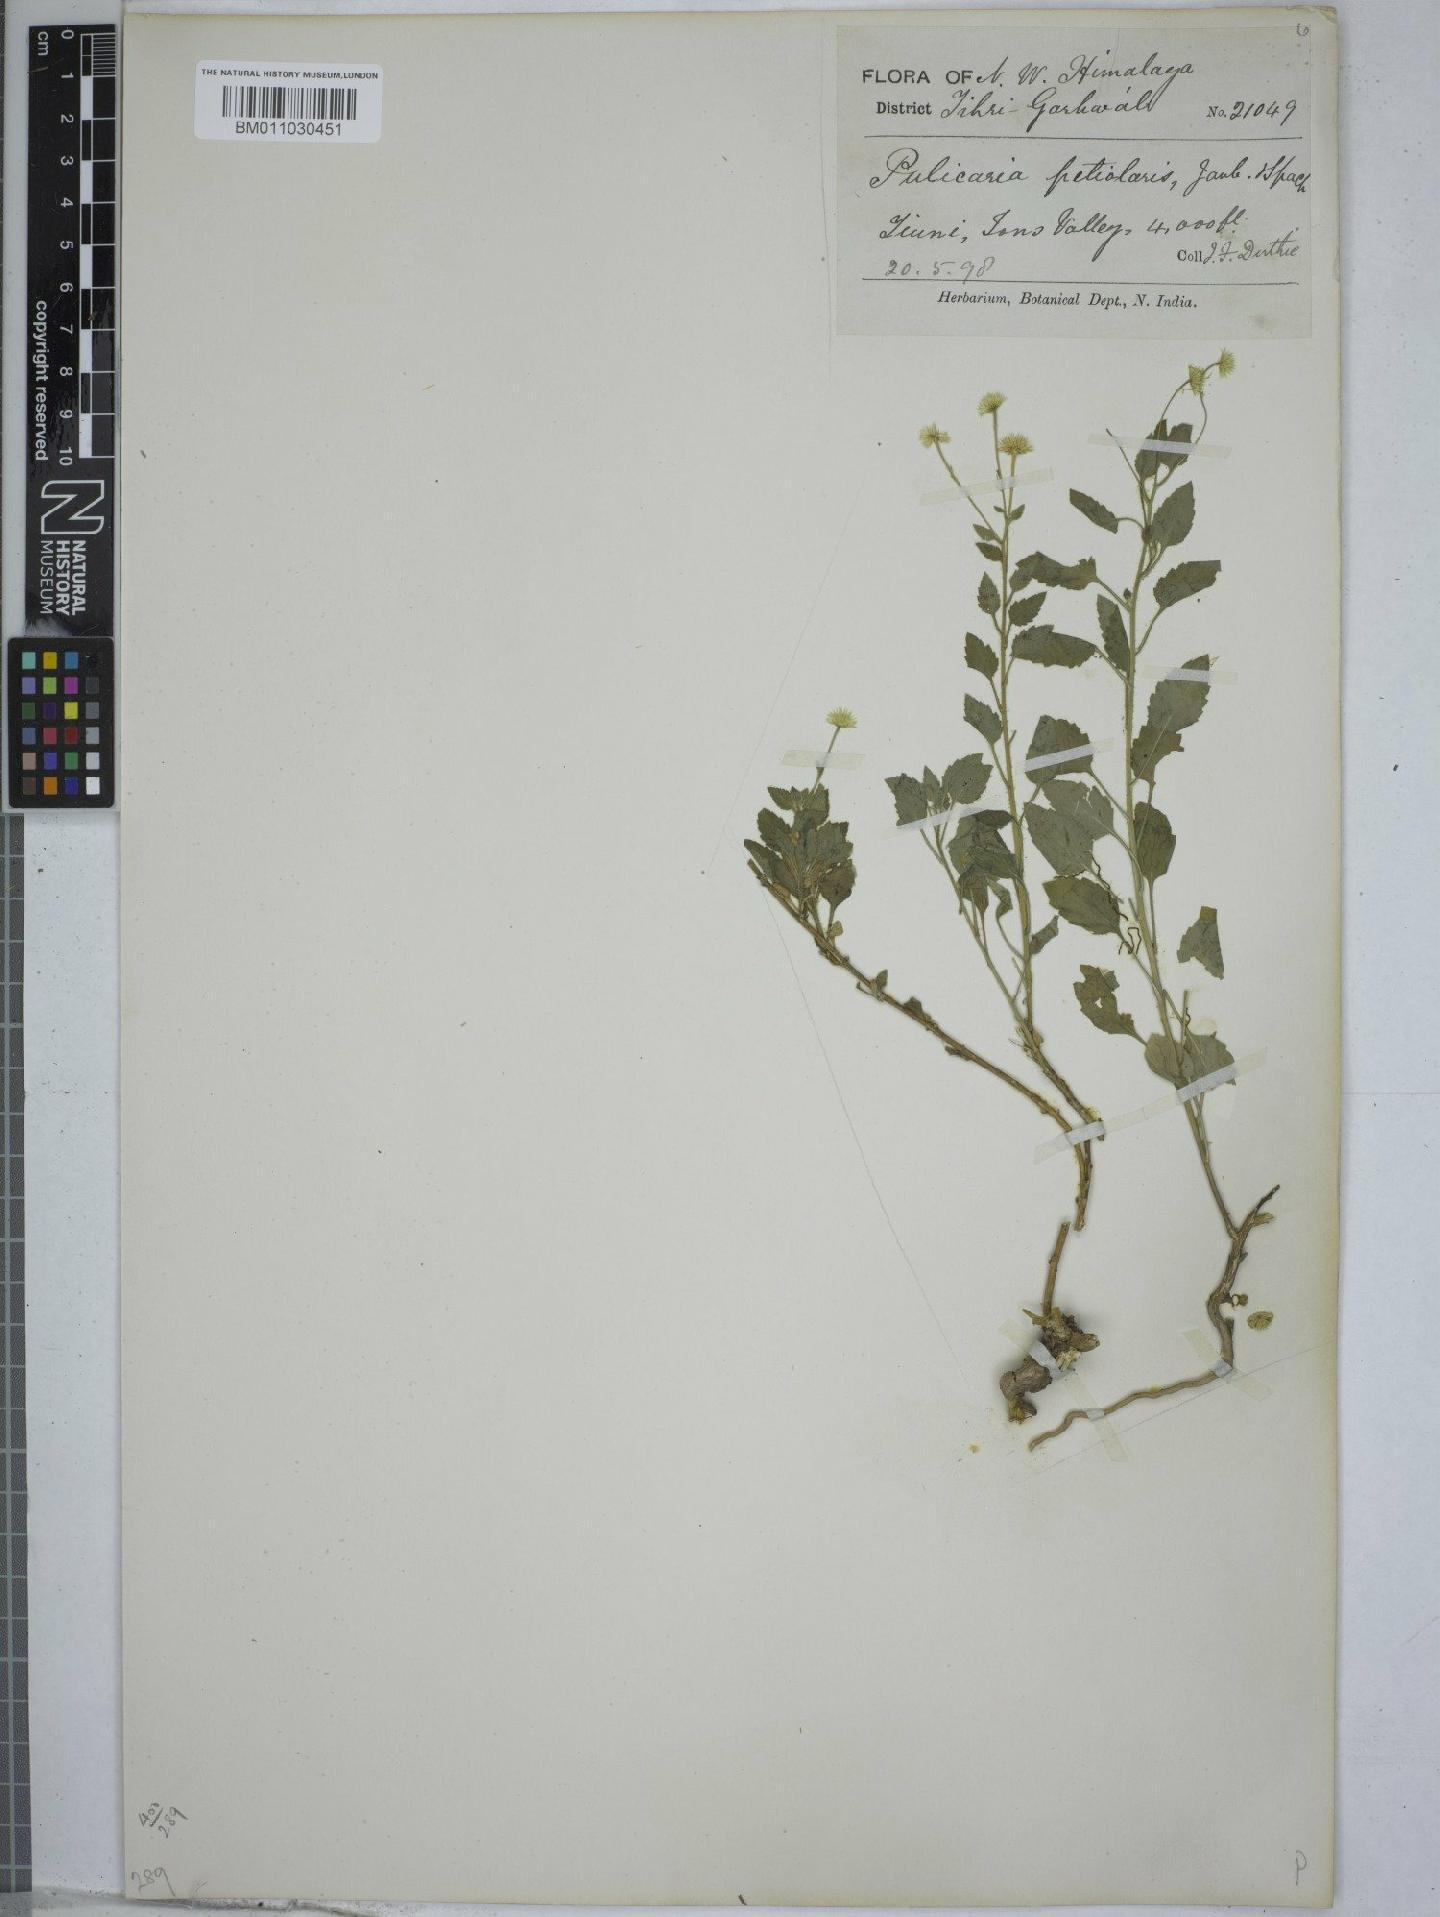 To NHMUK collection (Pulicaria petiolaris Jaub. & Spach; NHMUK:ecatalogue:9154145)